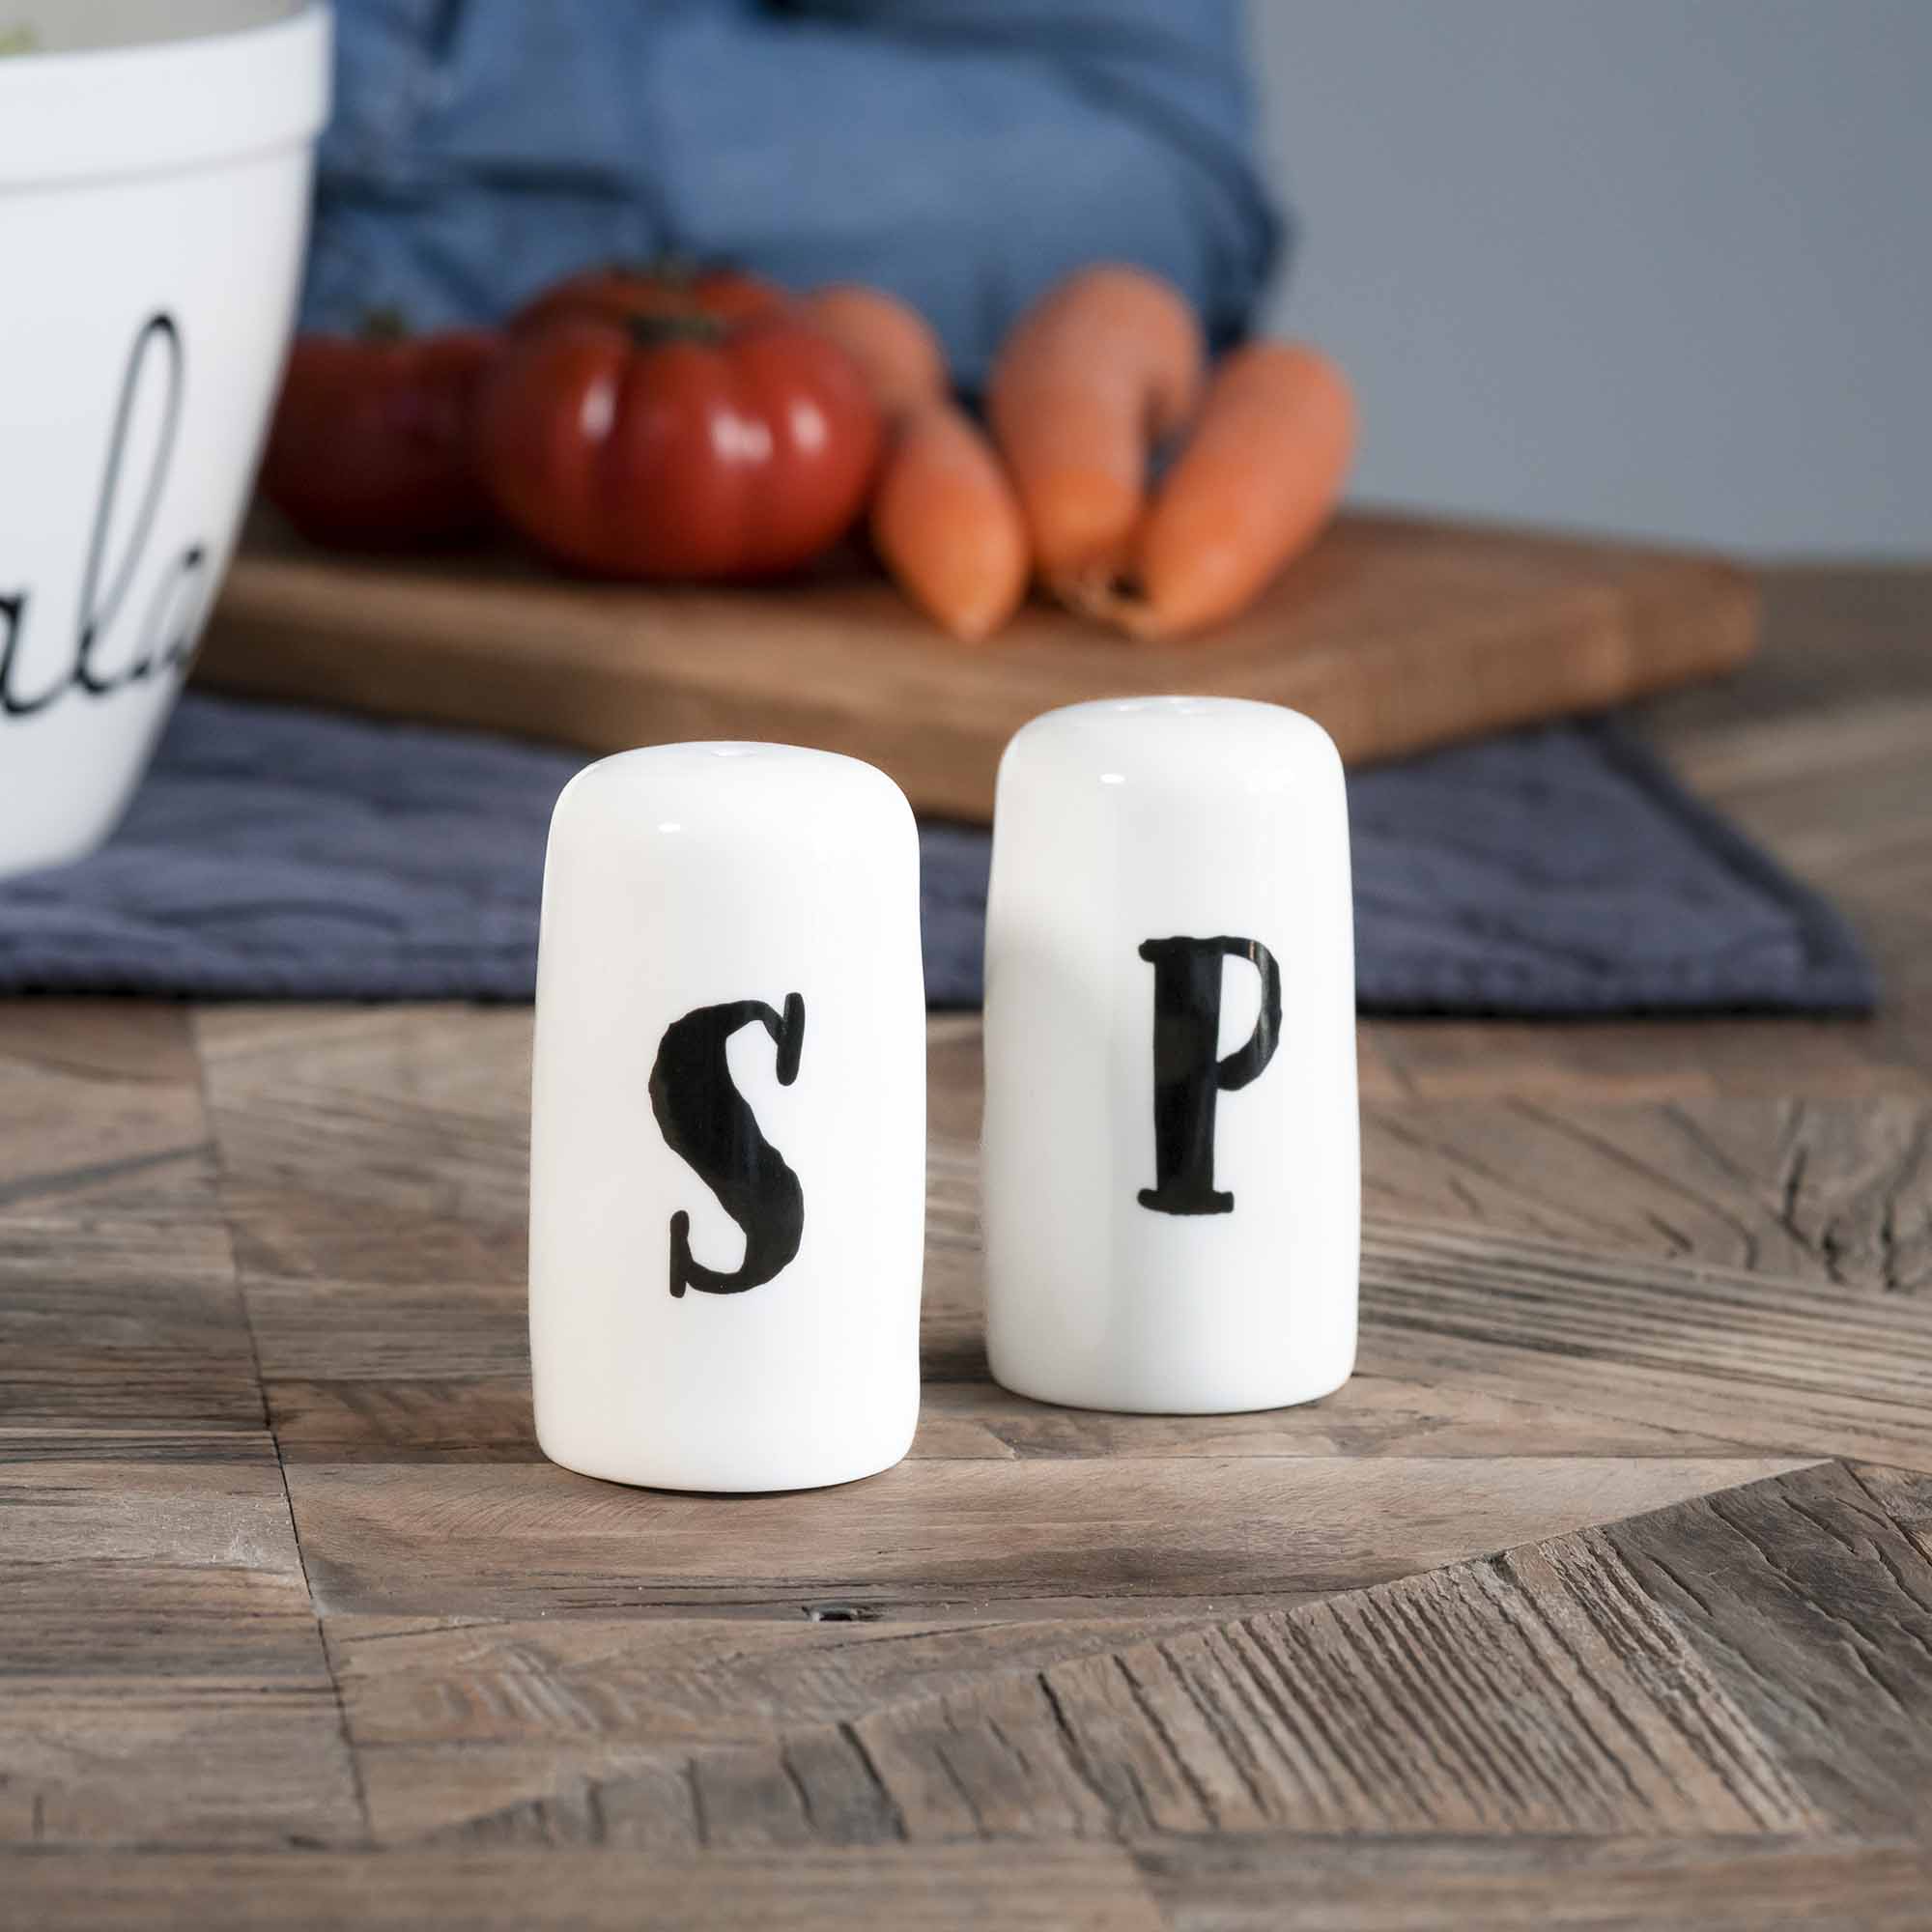 Set of salt and pepper "S" - "P"